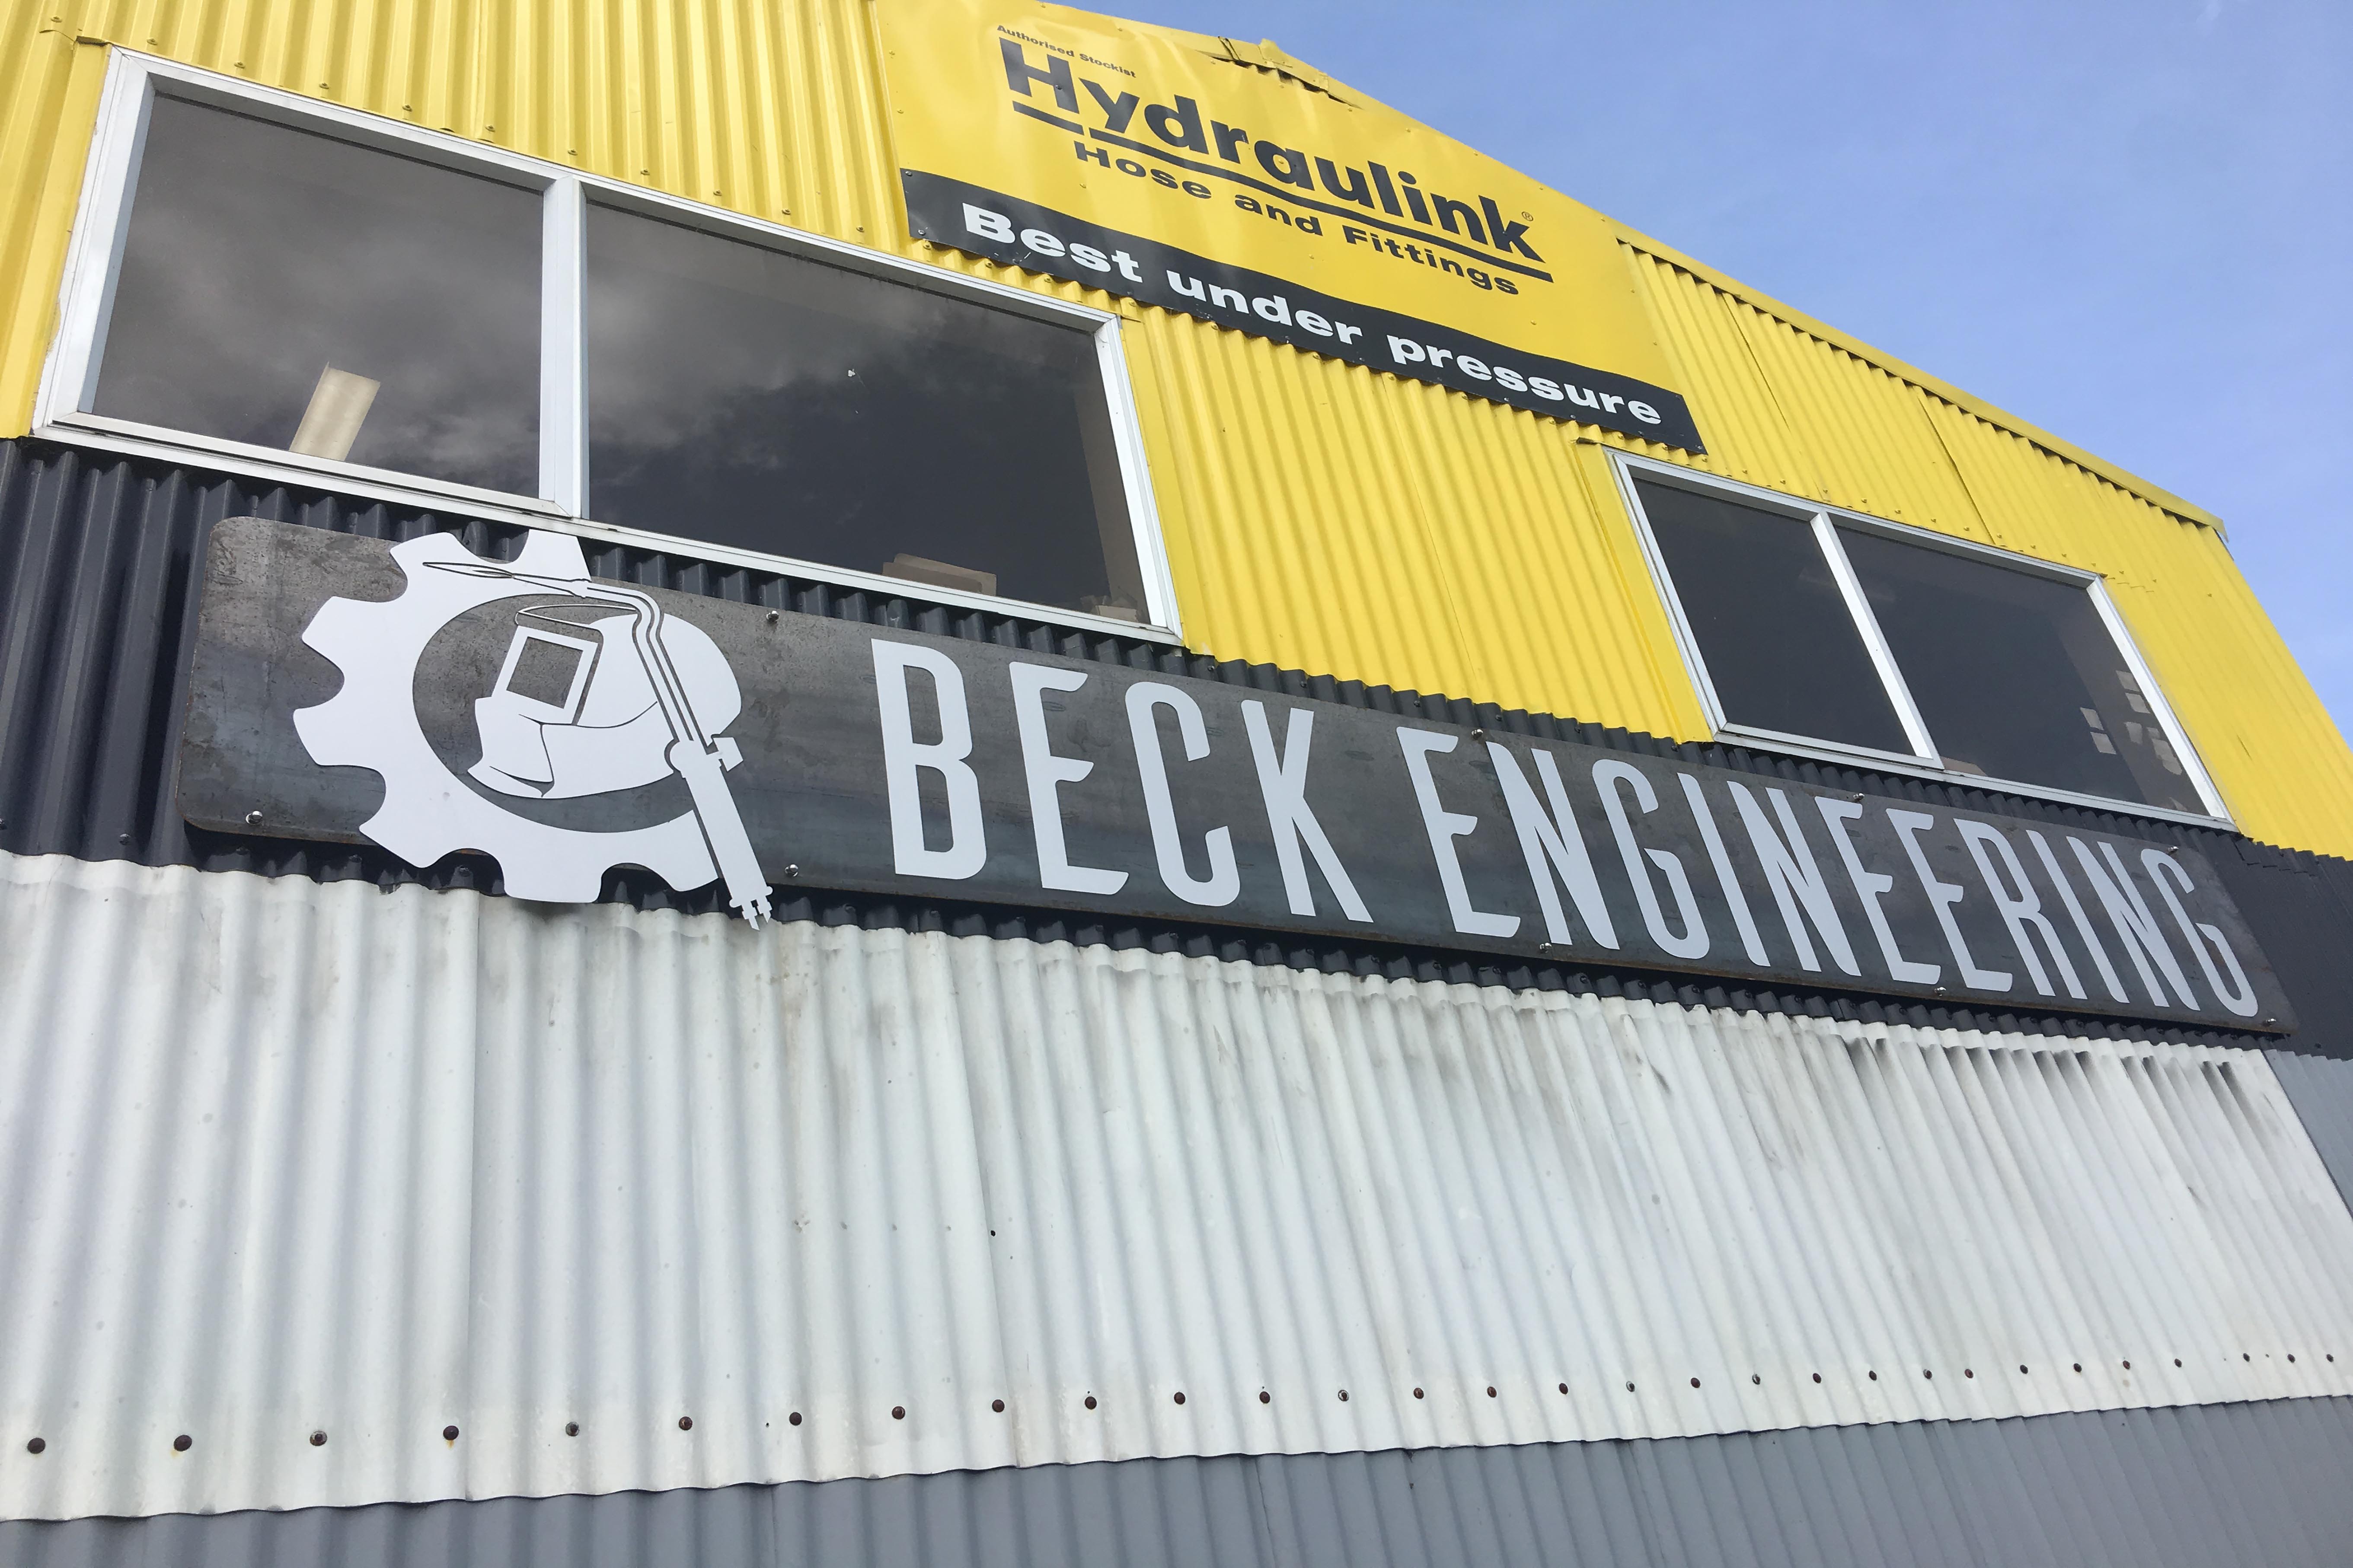 Beck Engineering